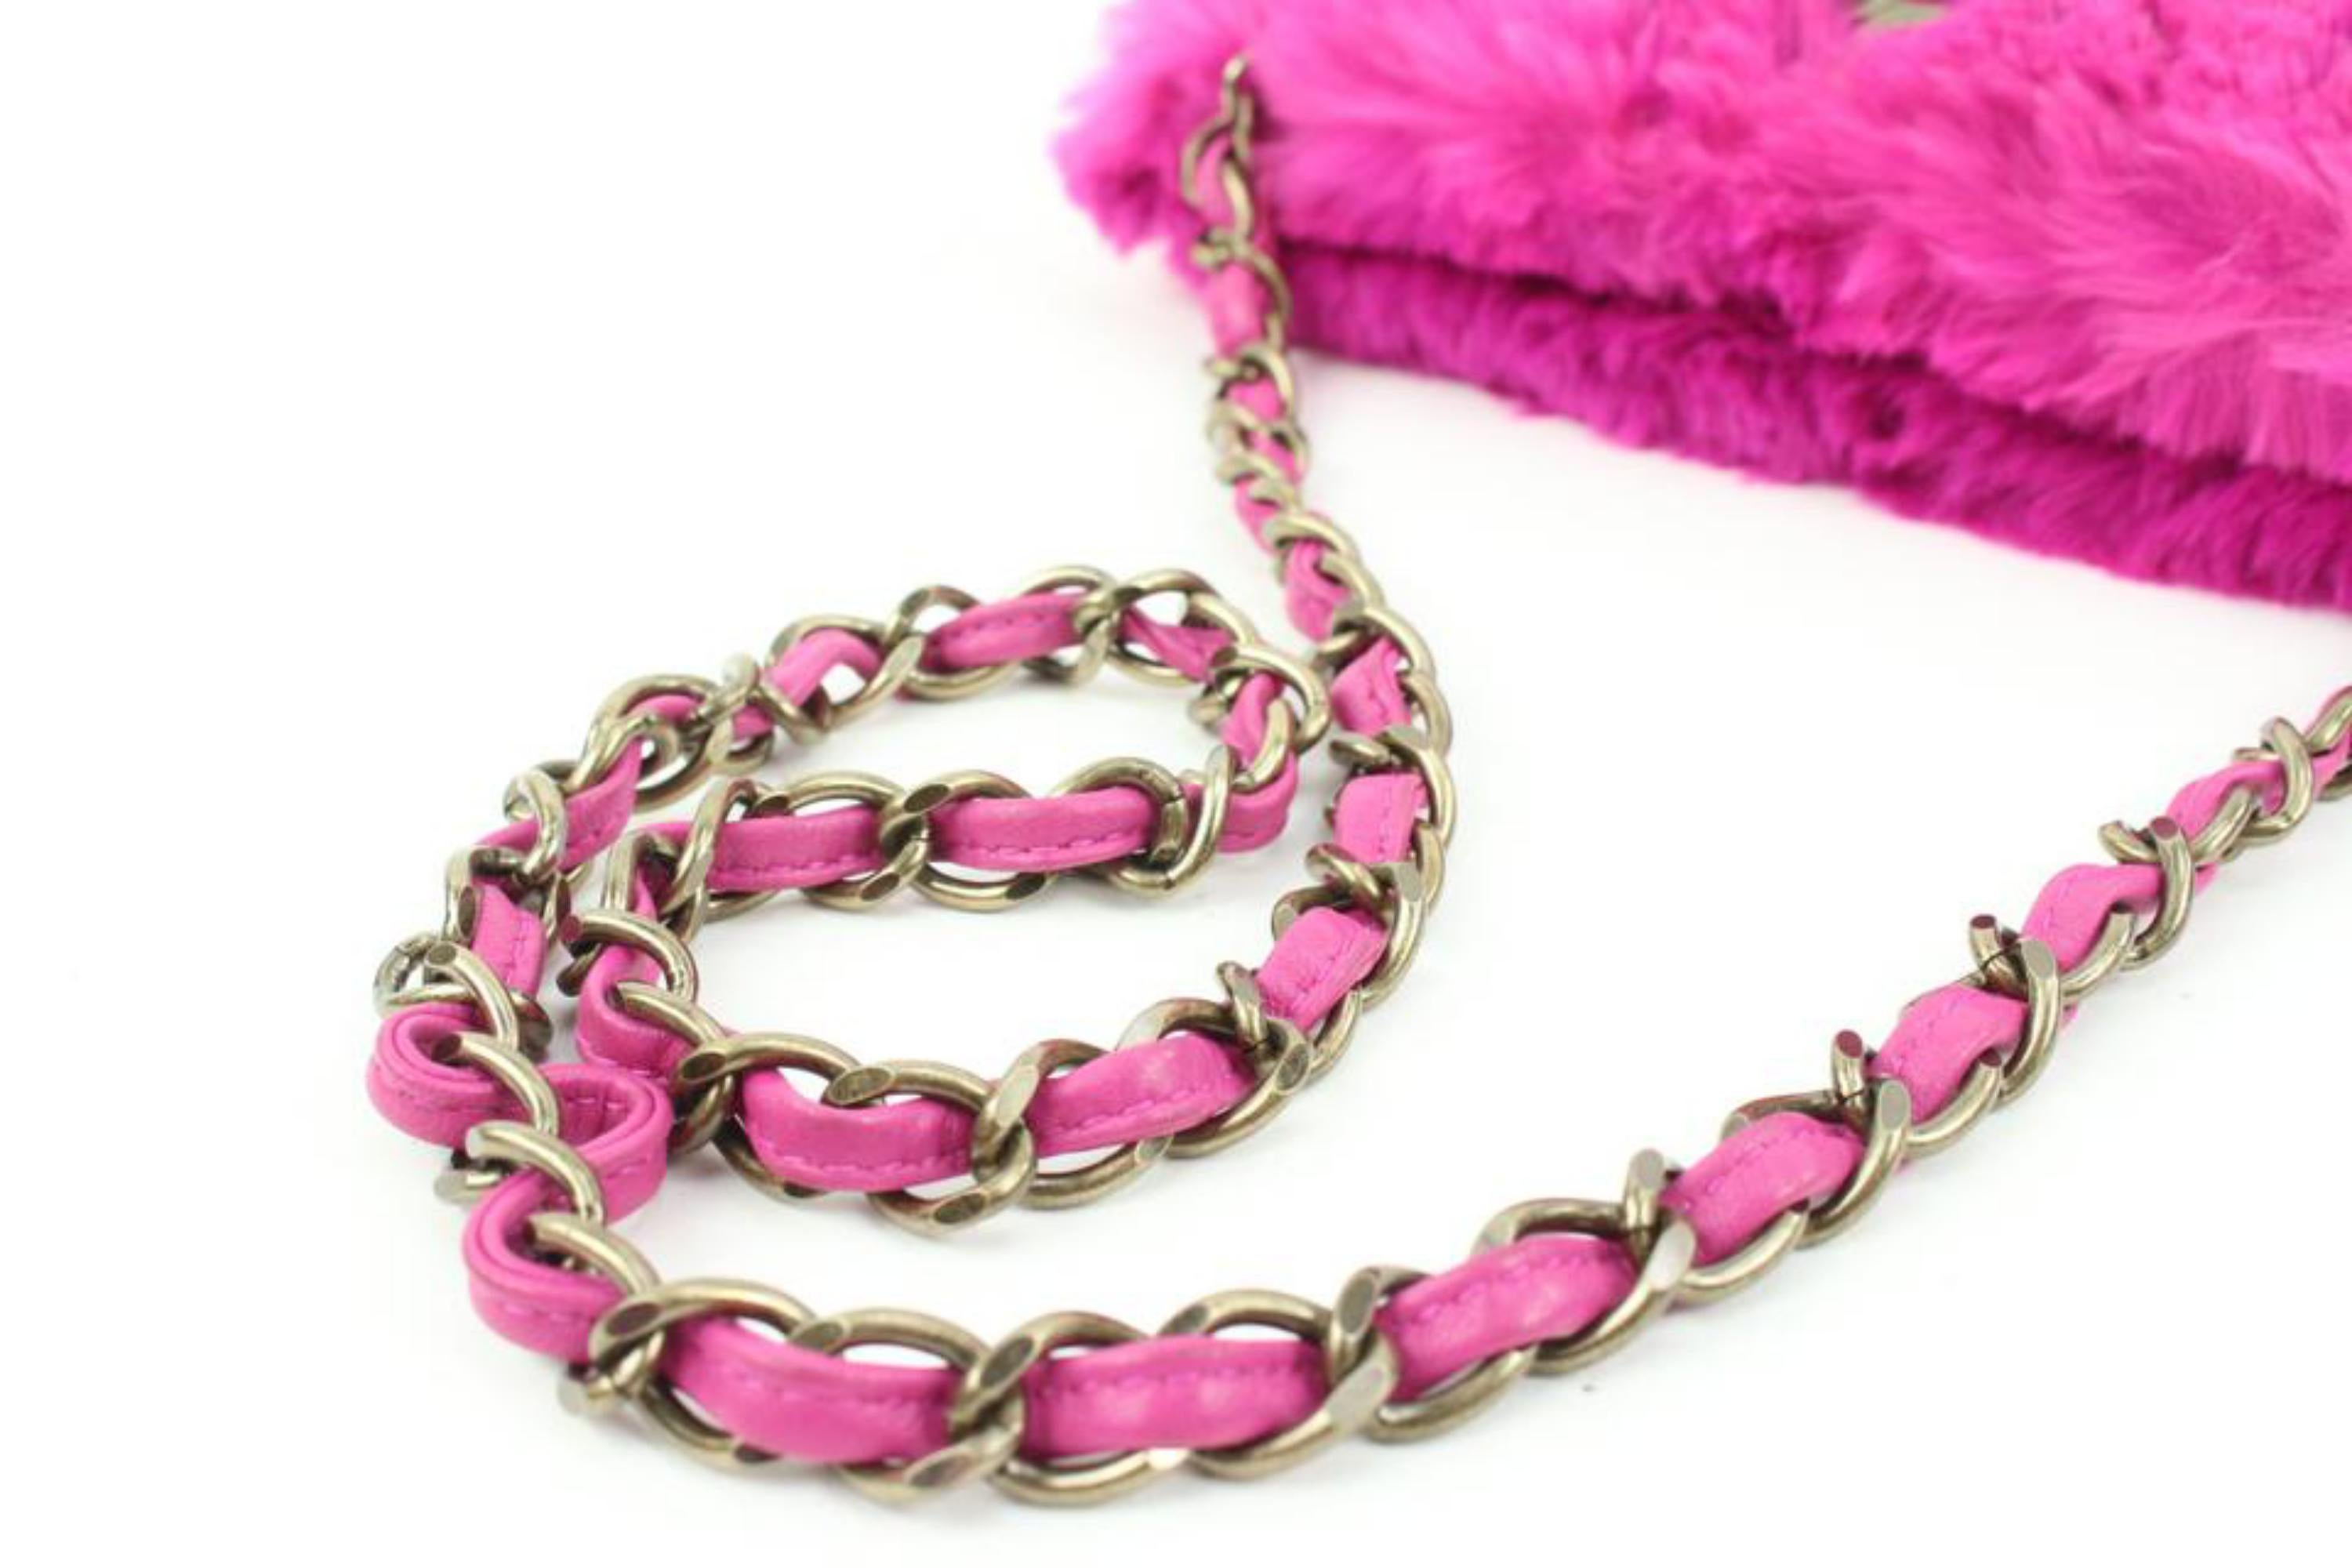 Chanel Fuchsia Pink Rabbit Fur Chain Shoulder Bag 3C88a 2